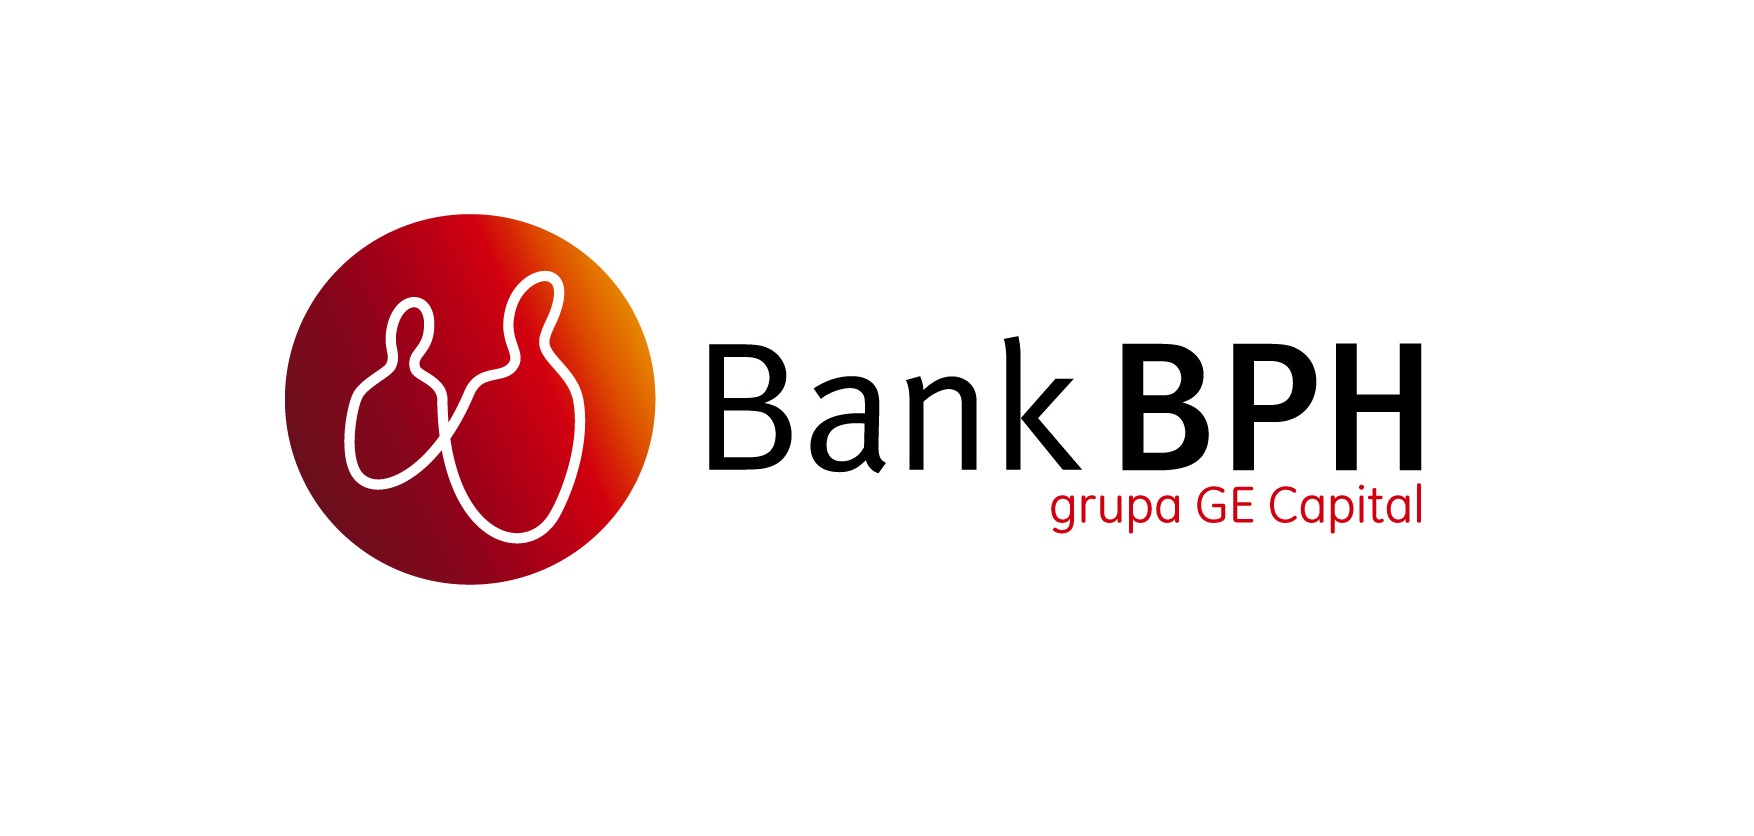 Bank BPH logo